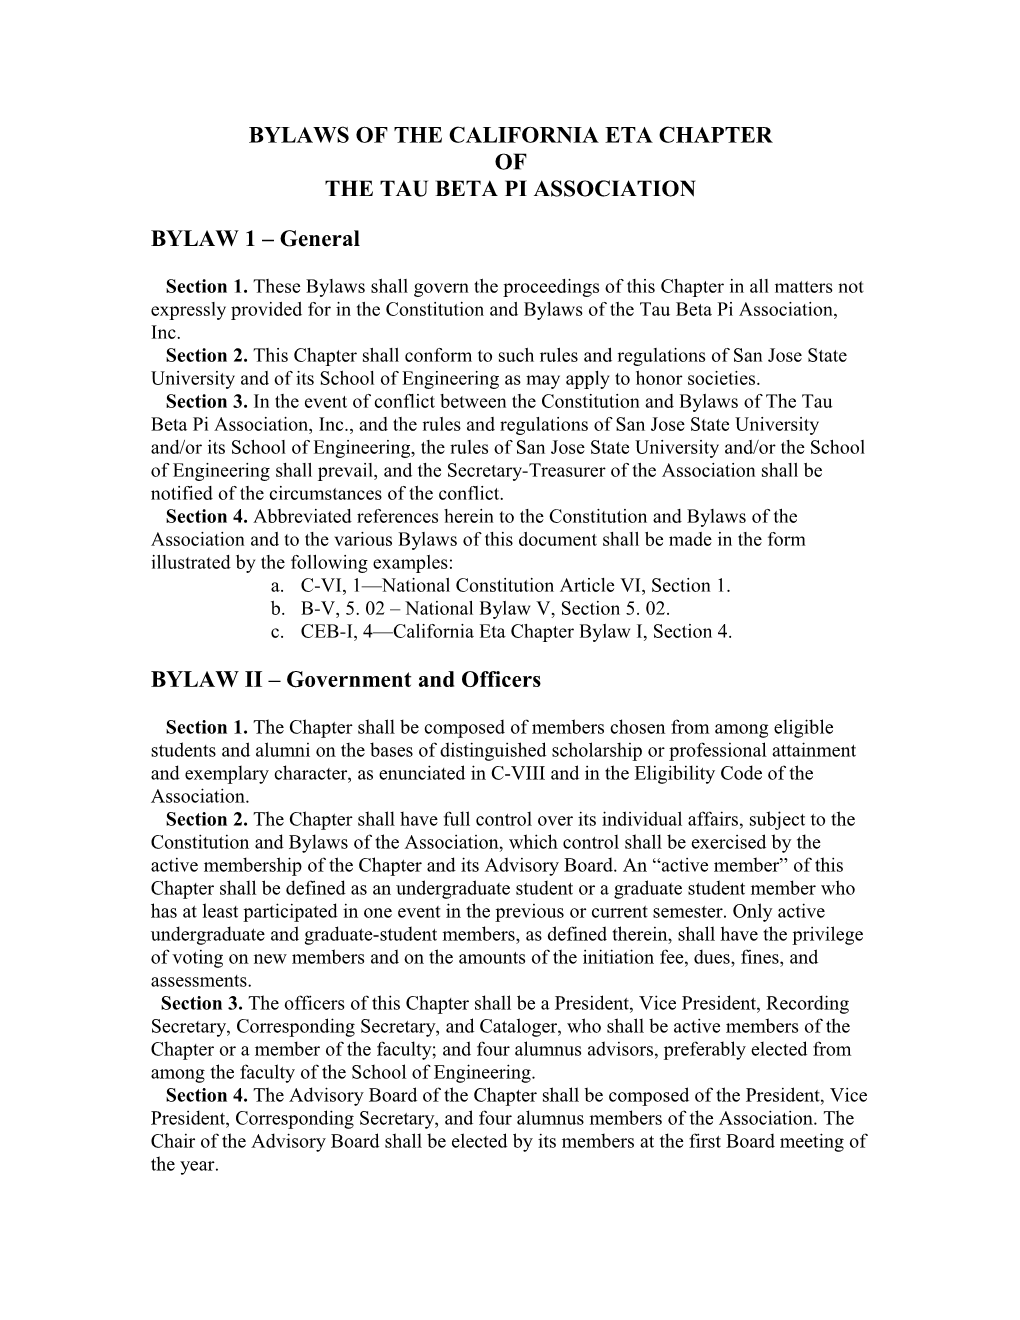 Bylaws of the California Eta Chapter